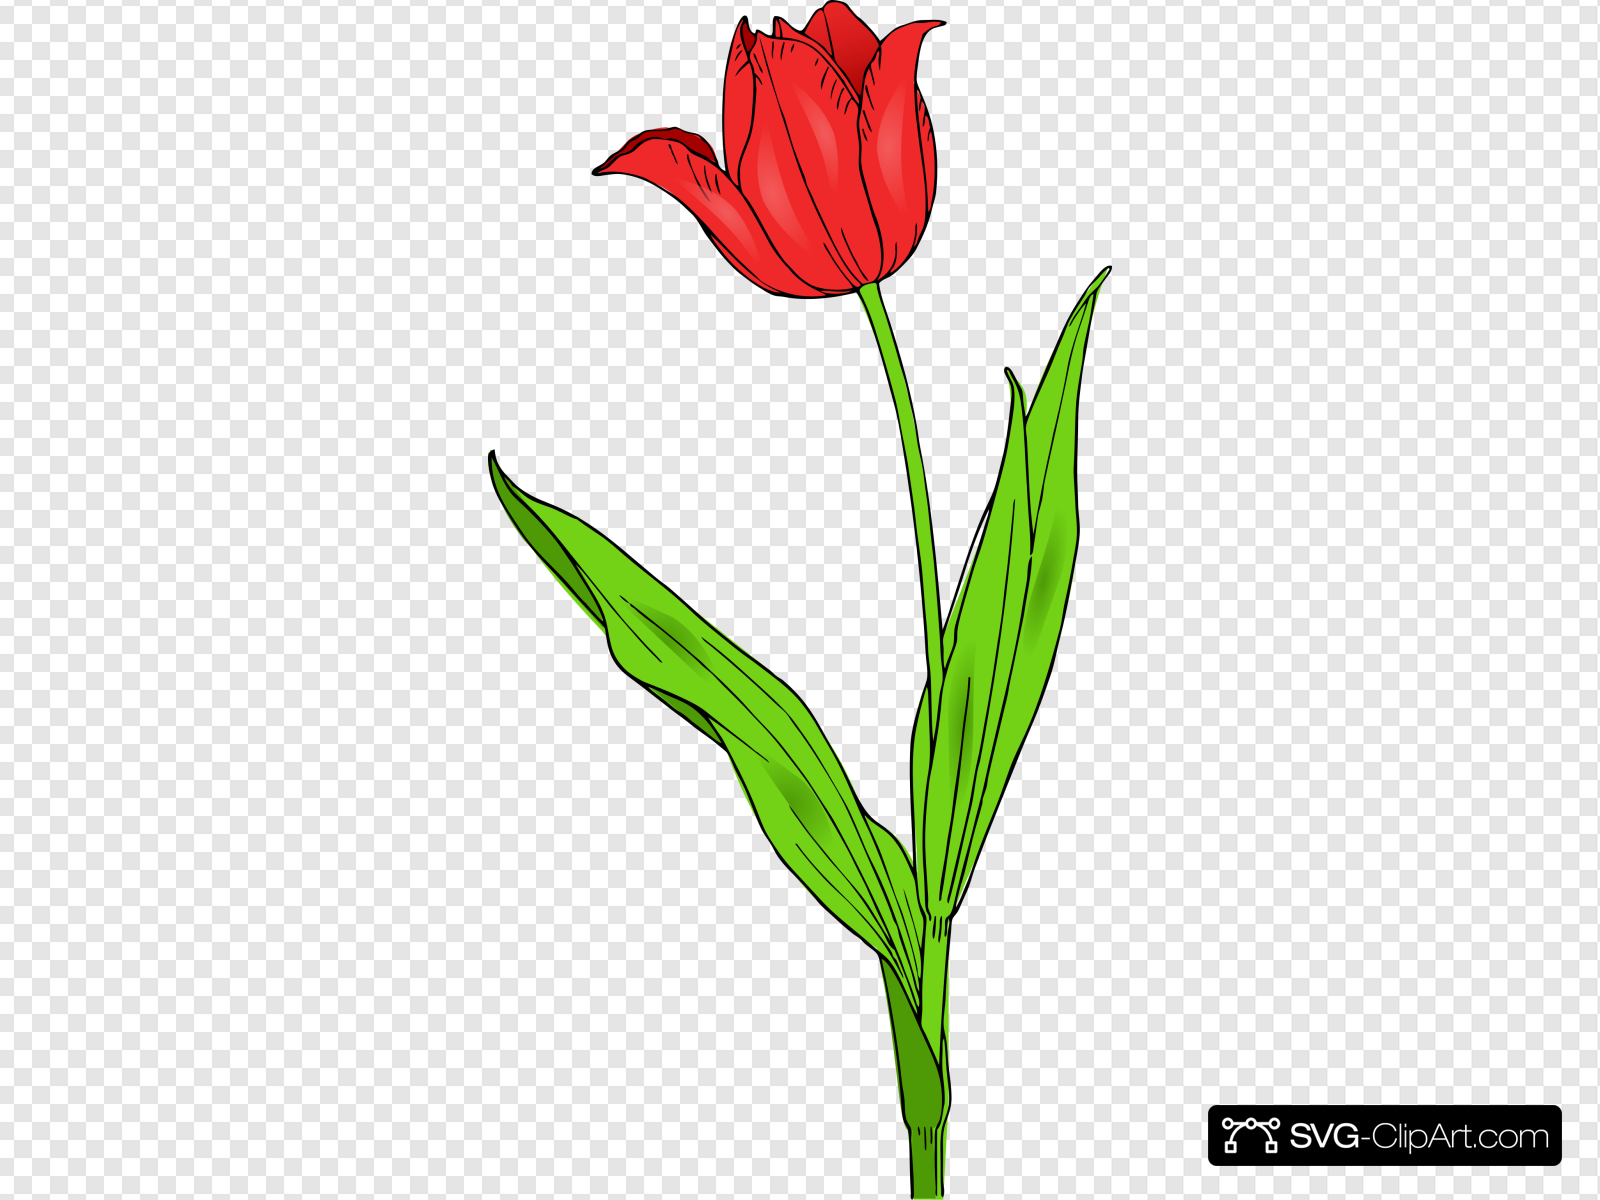 Red Tulip Clip art, Icon and SVG.